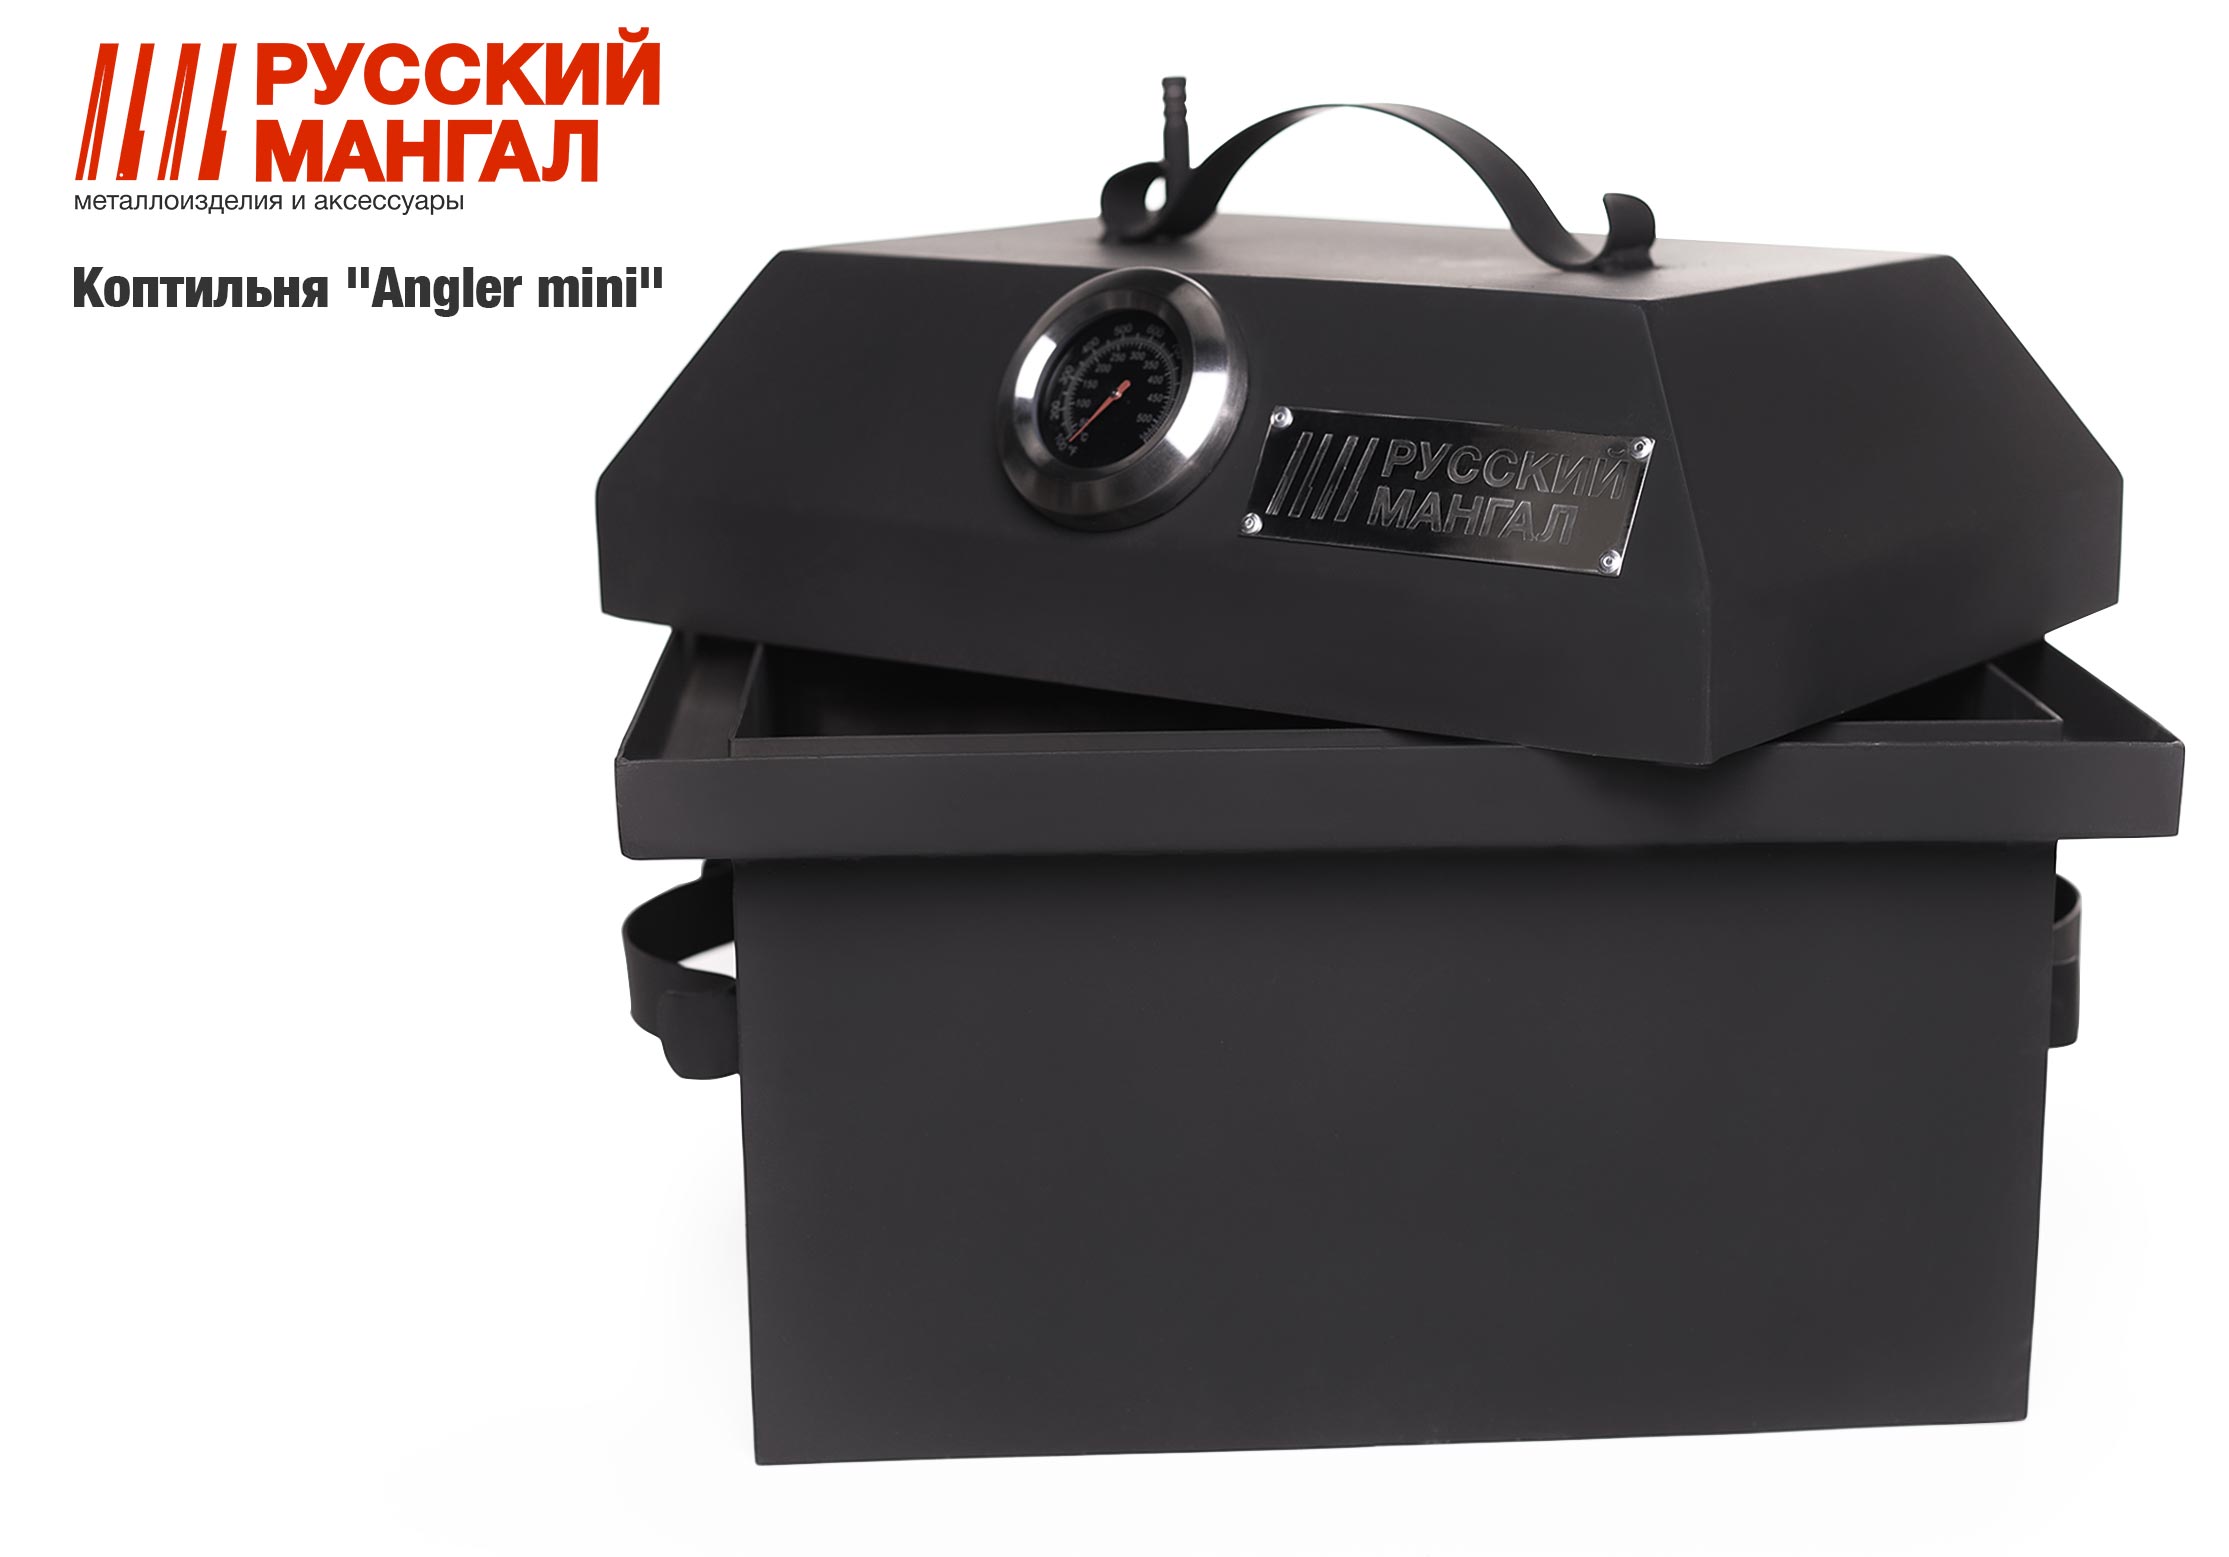 Коптильня горячего копчения одноуровневая, Русский мангал, Angler mini, K00003, 35х25х36см